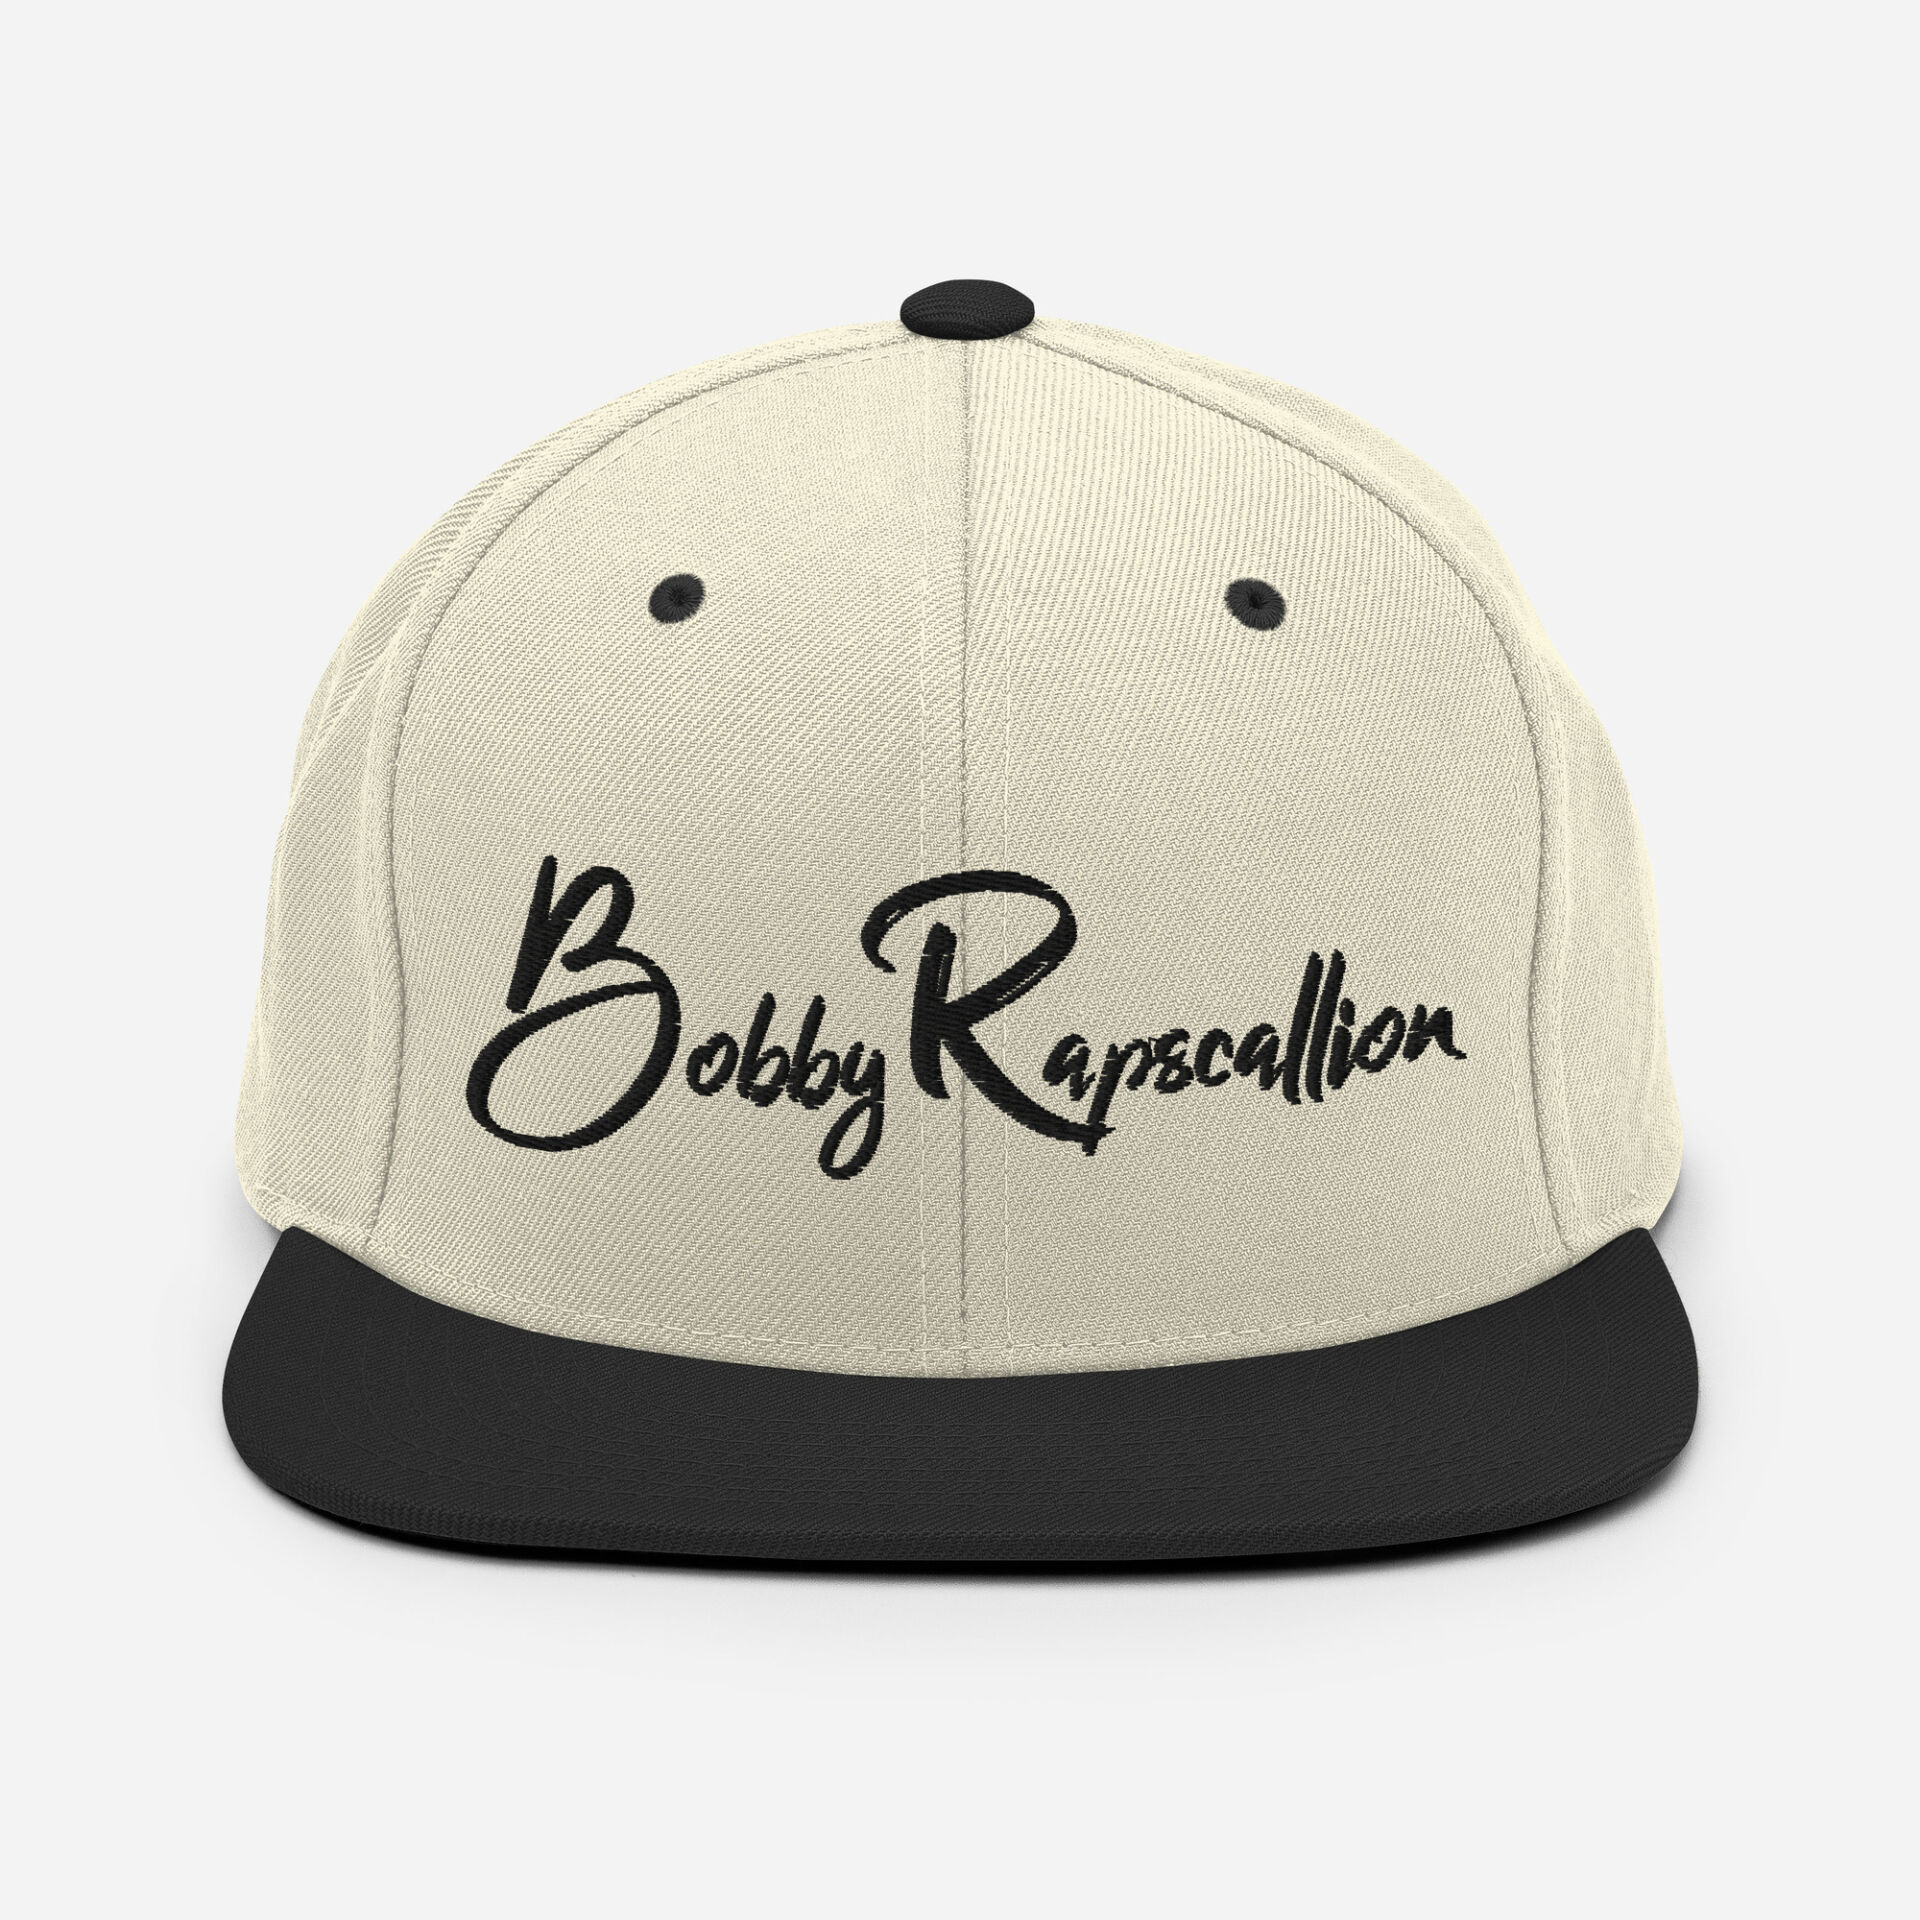 Bobby Rapscallion – BR1 Series – Black Signature Snapback